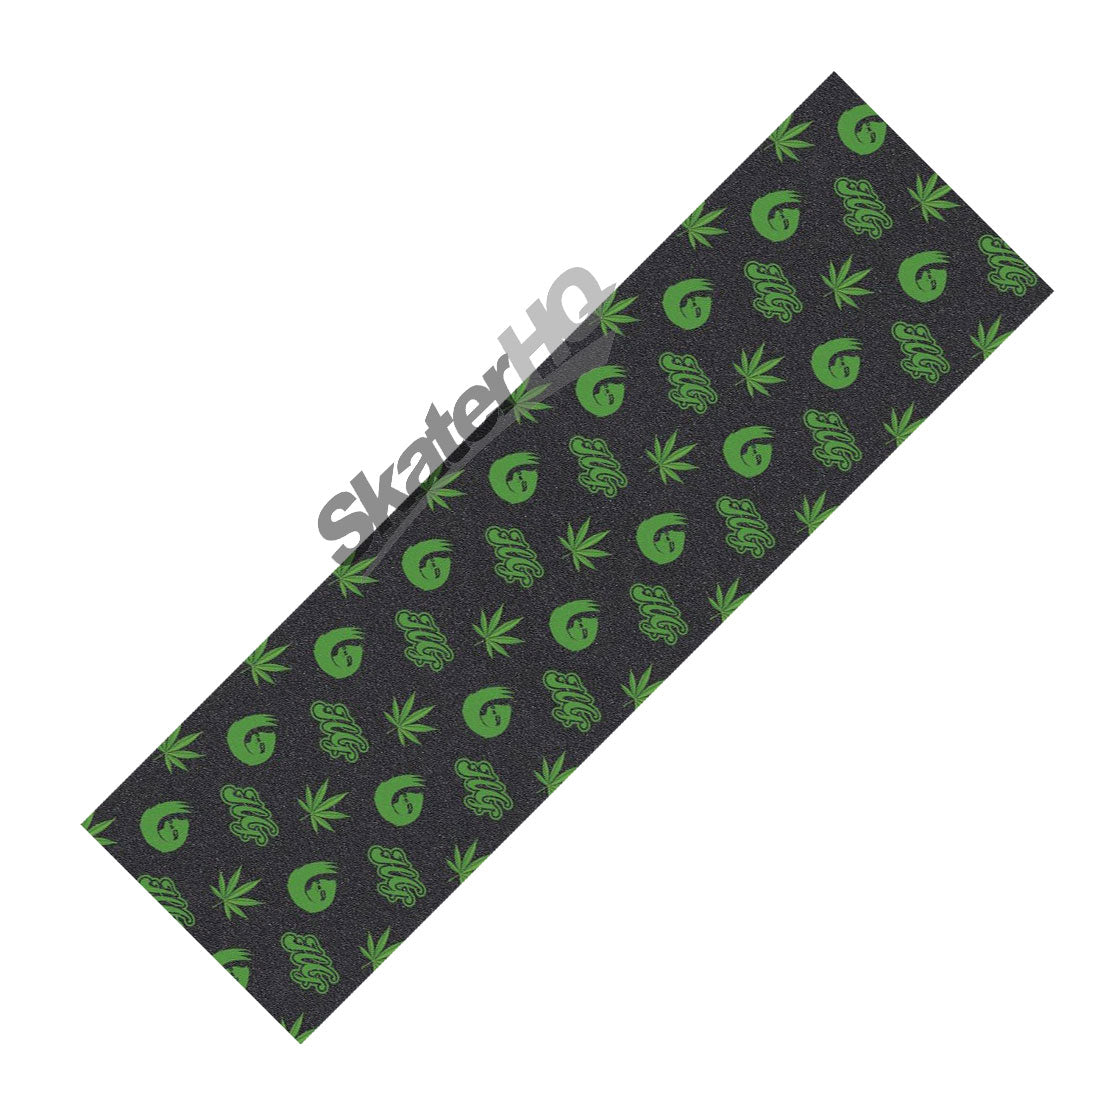 Hella Sloth Dot 420 Griptape - Black/Green Griptape